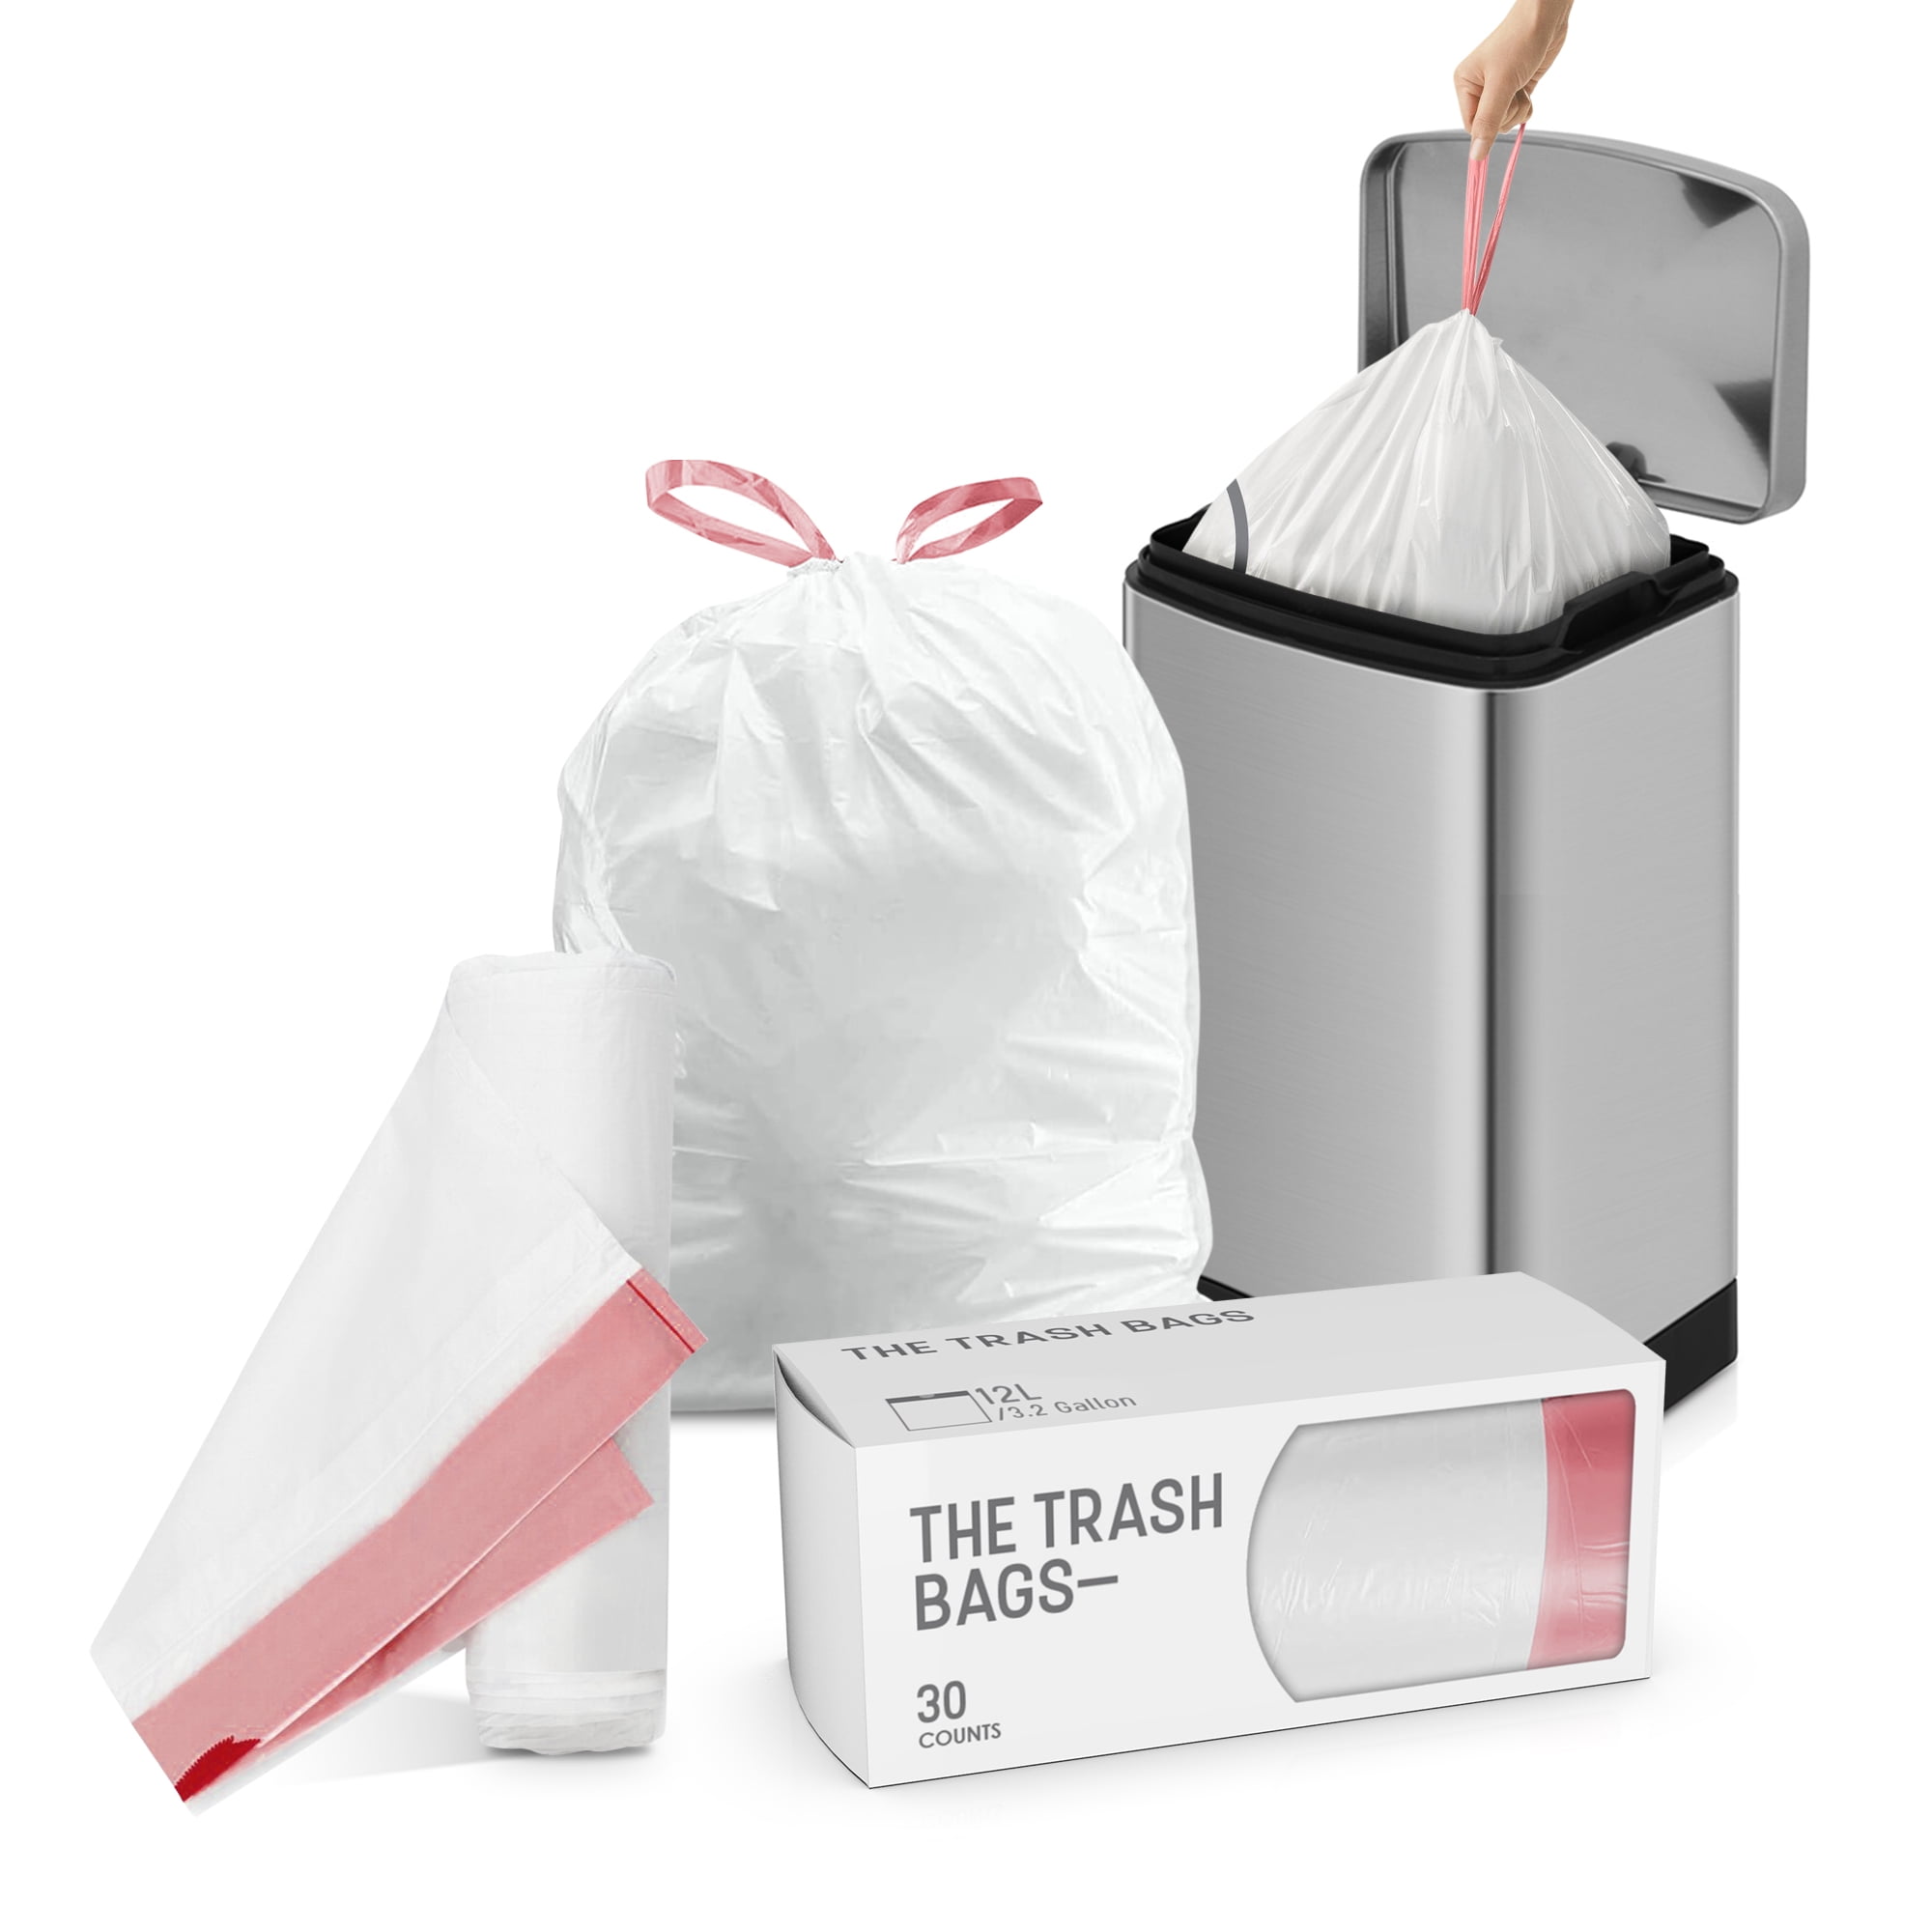 6-Gallon Drawstring Trash Bag 30-Count